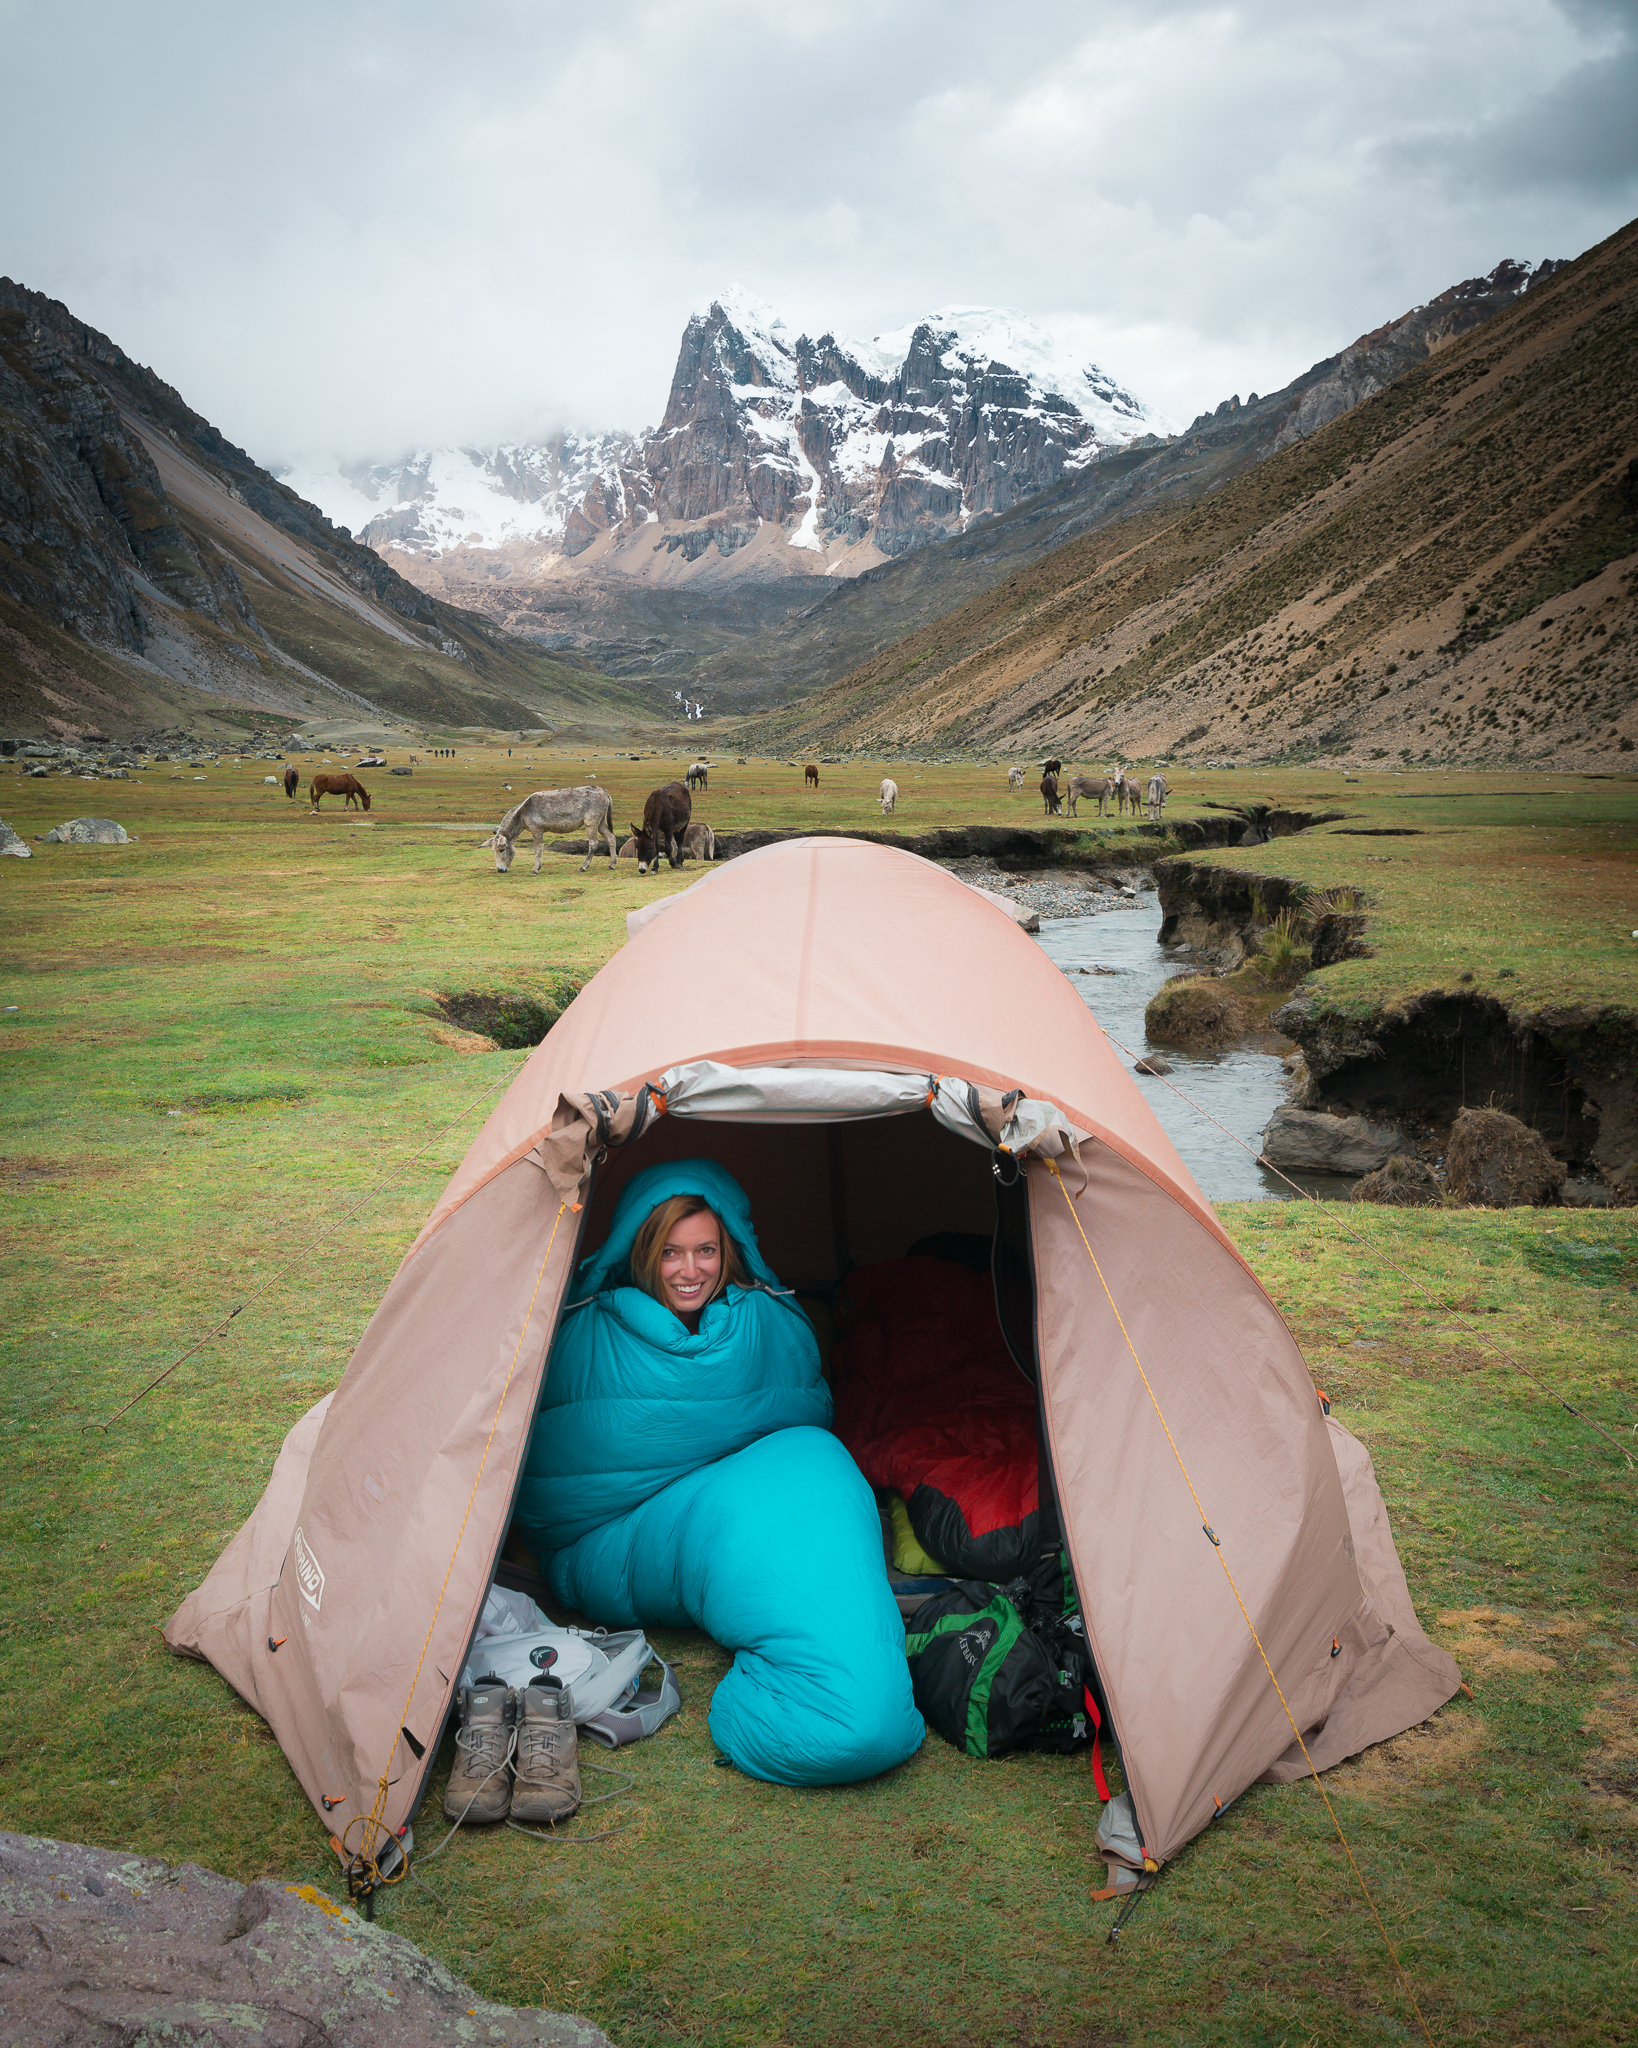 One of many basecamps along the Cordillera Huayhuash Trek in Peru.